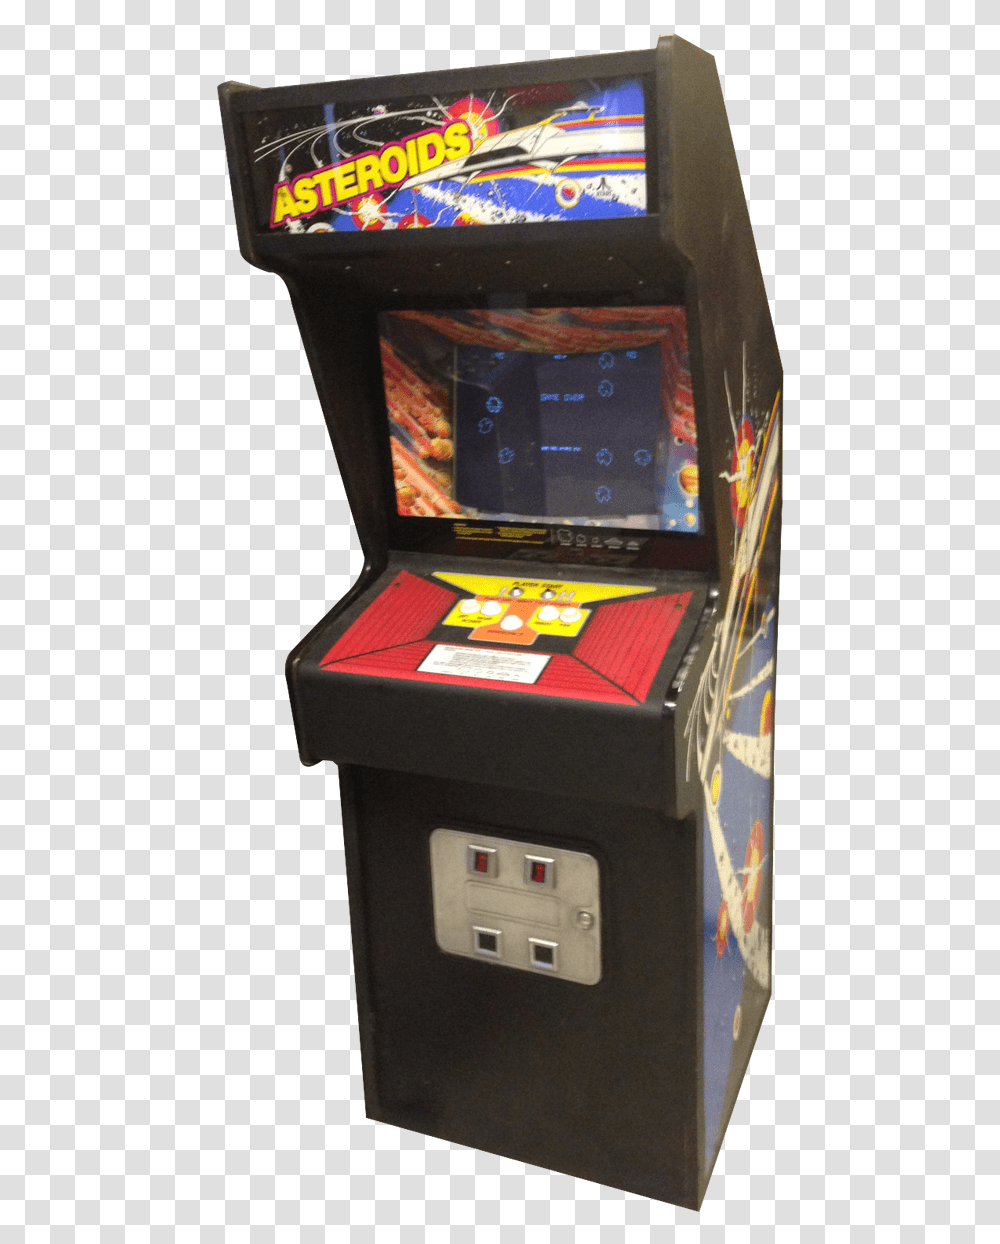 Original Asteroids Arcade Machine Video Game Arcade Cabinet Transparent Png